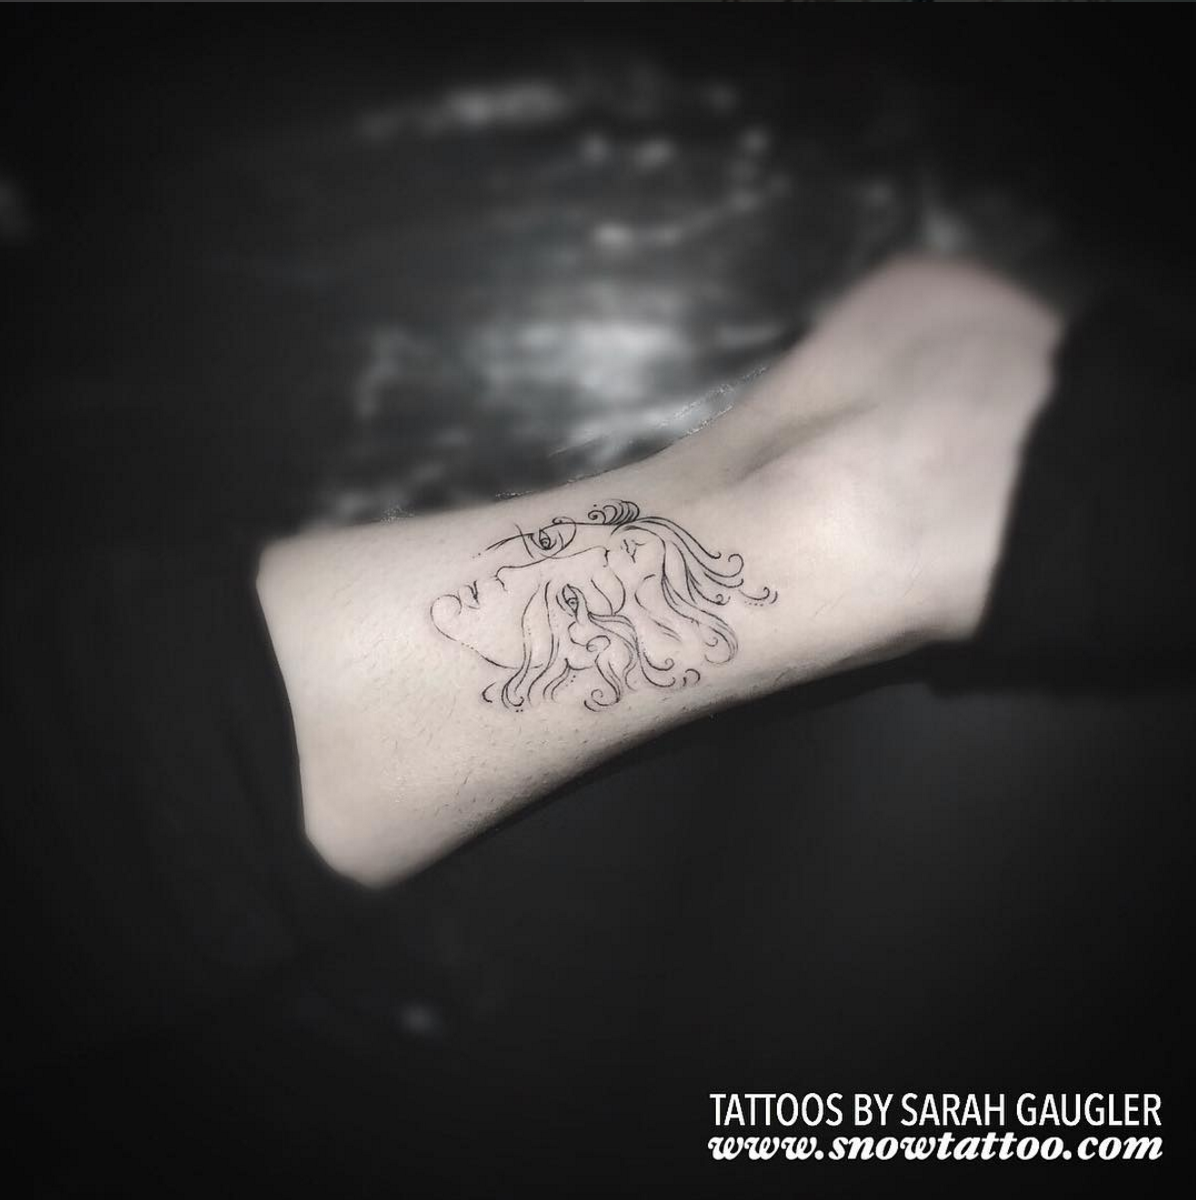 Sarah Gaugler Snow Tattoo Custom Two Heads Finelinetattoo New York Best Tattoos Best Tattoo Artist NYC.png